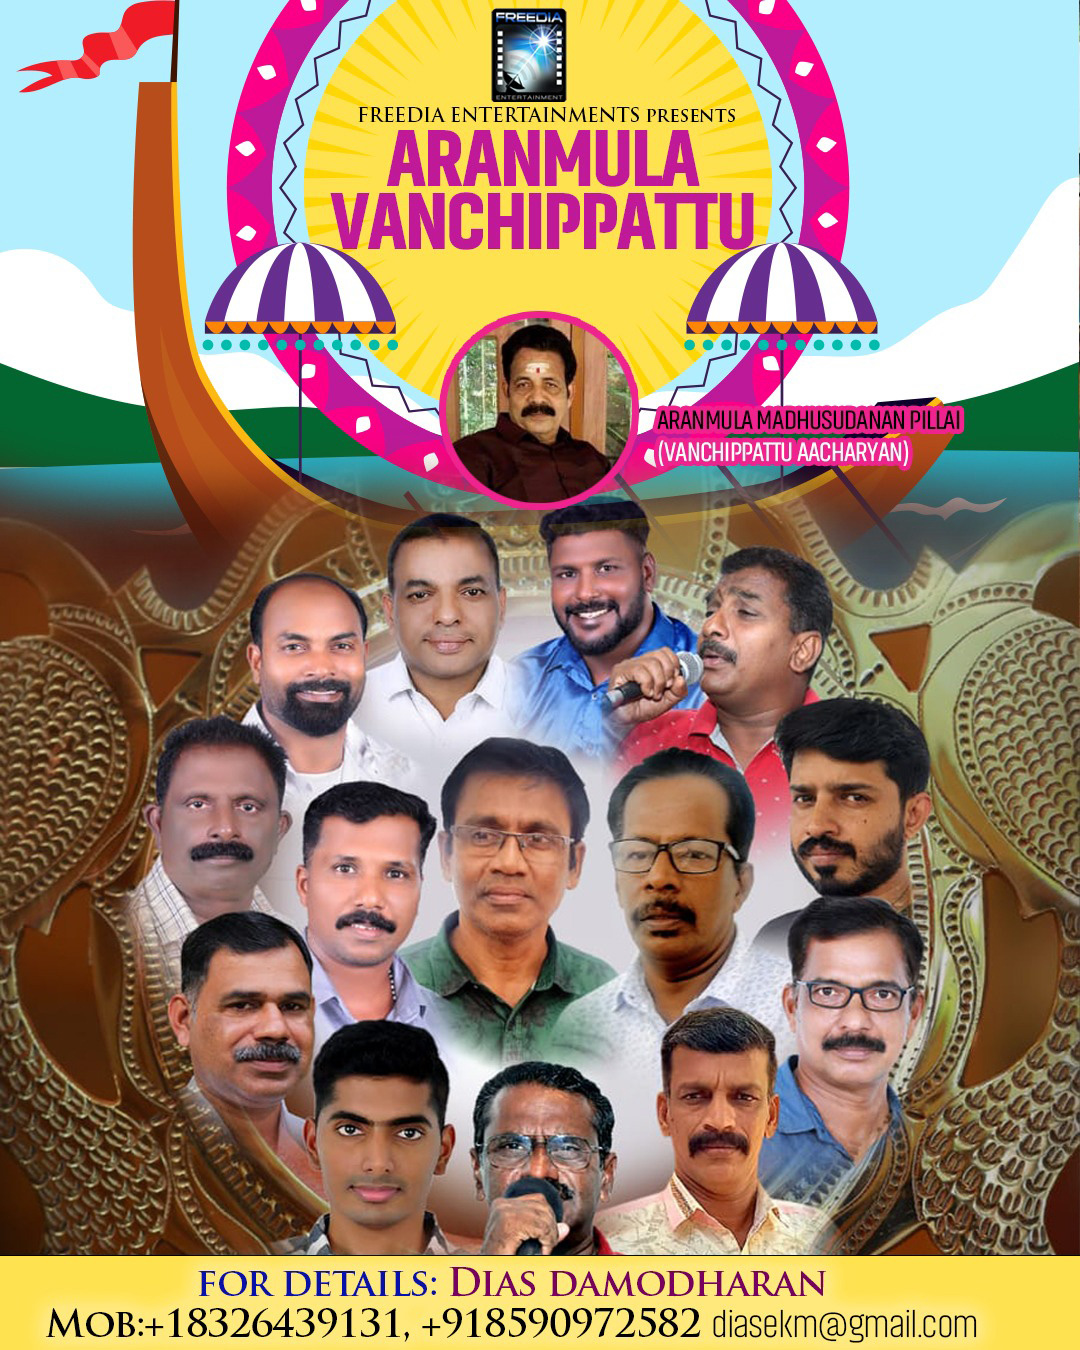 vanchipattu poster